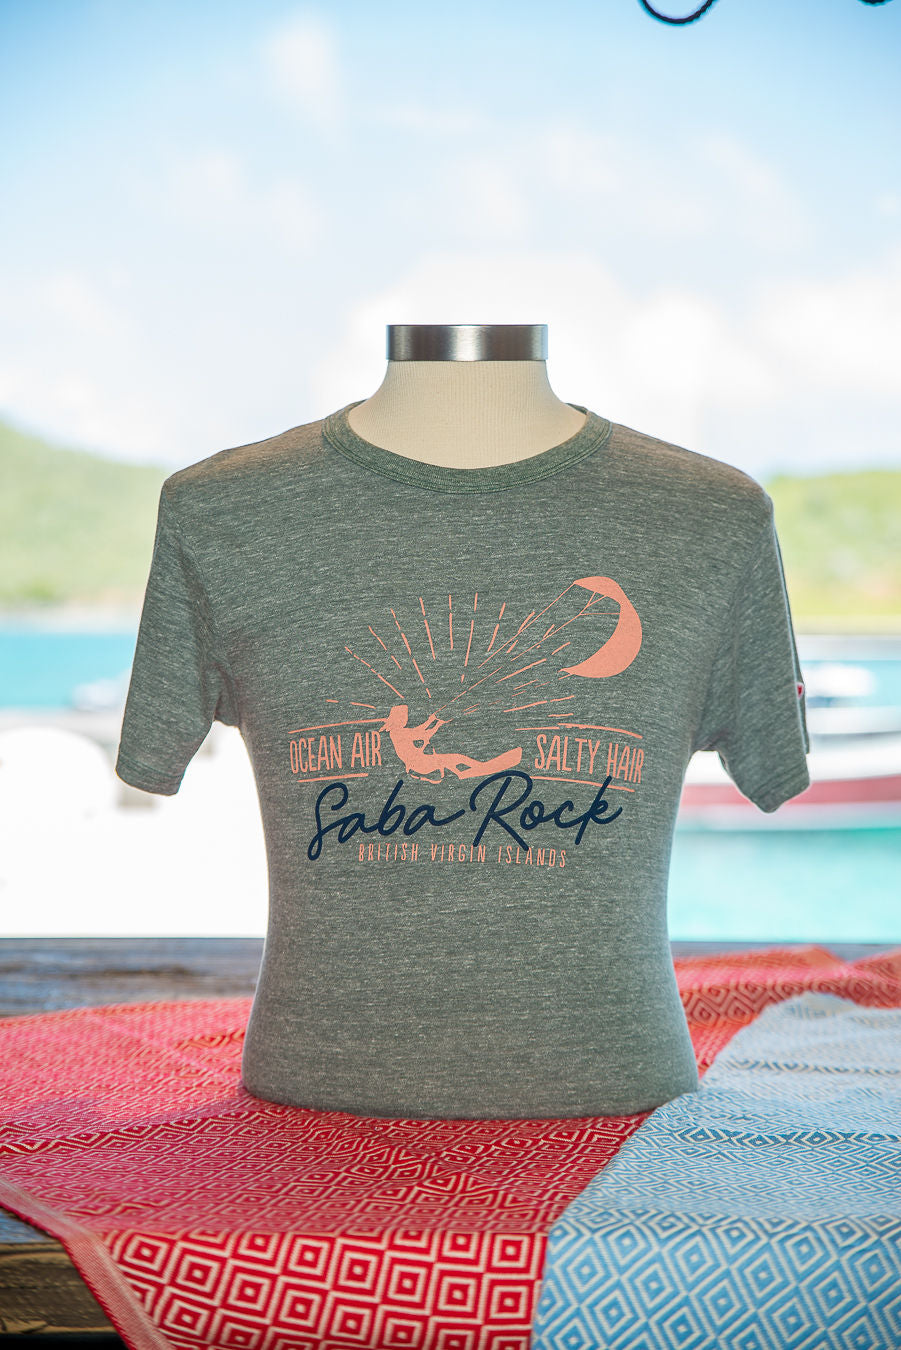 Kite Saba Rock T-Shirt